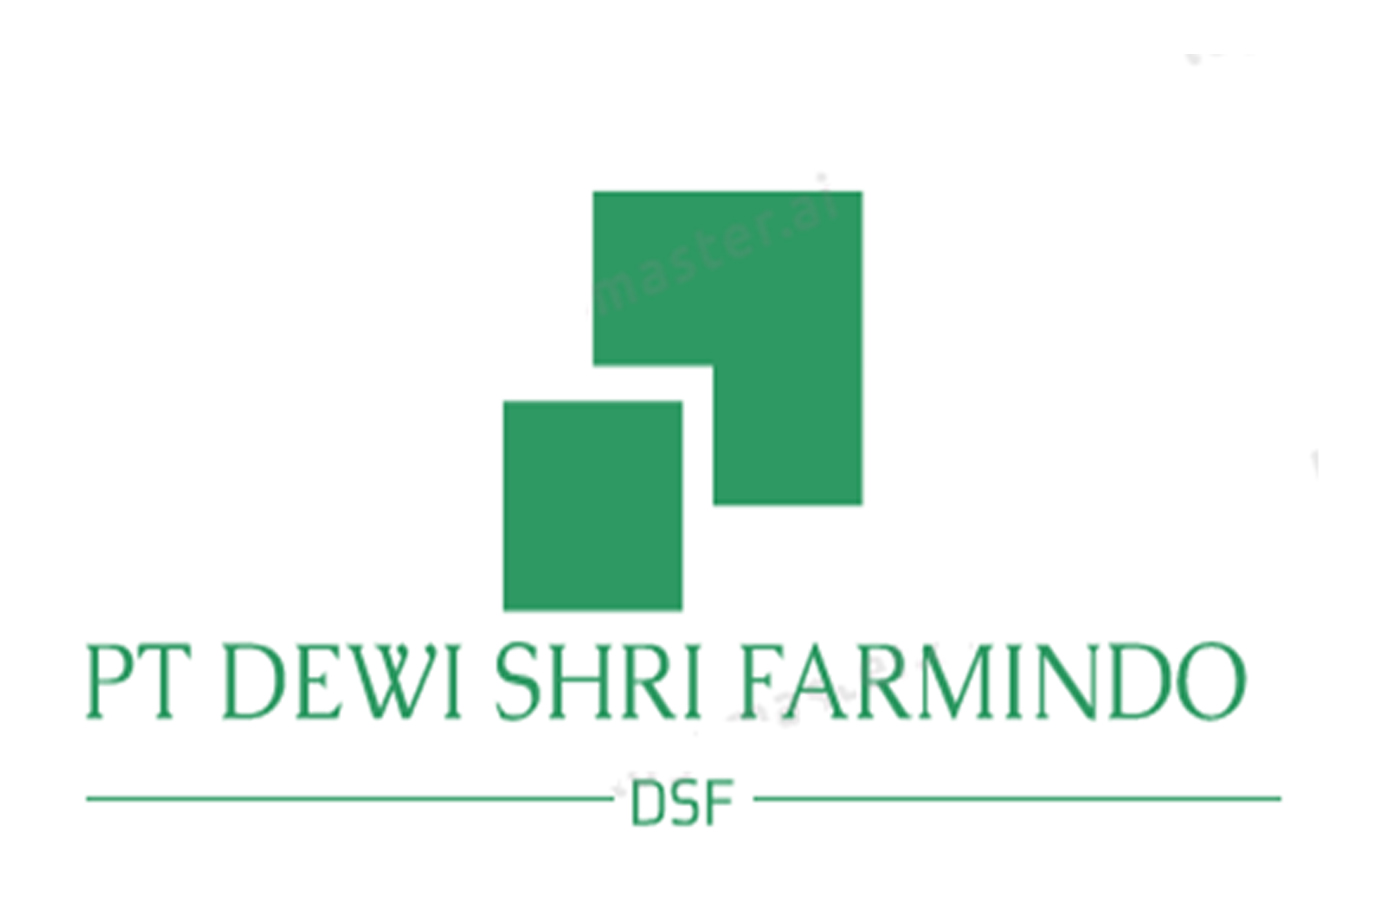 DEWI SHRI FARMINDO (DEWI) MASIH SIMPAN DANA IPO SEBESAR Rp9,97 MILIAR